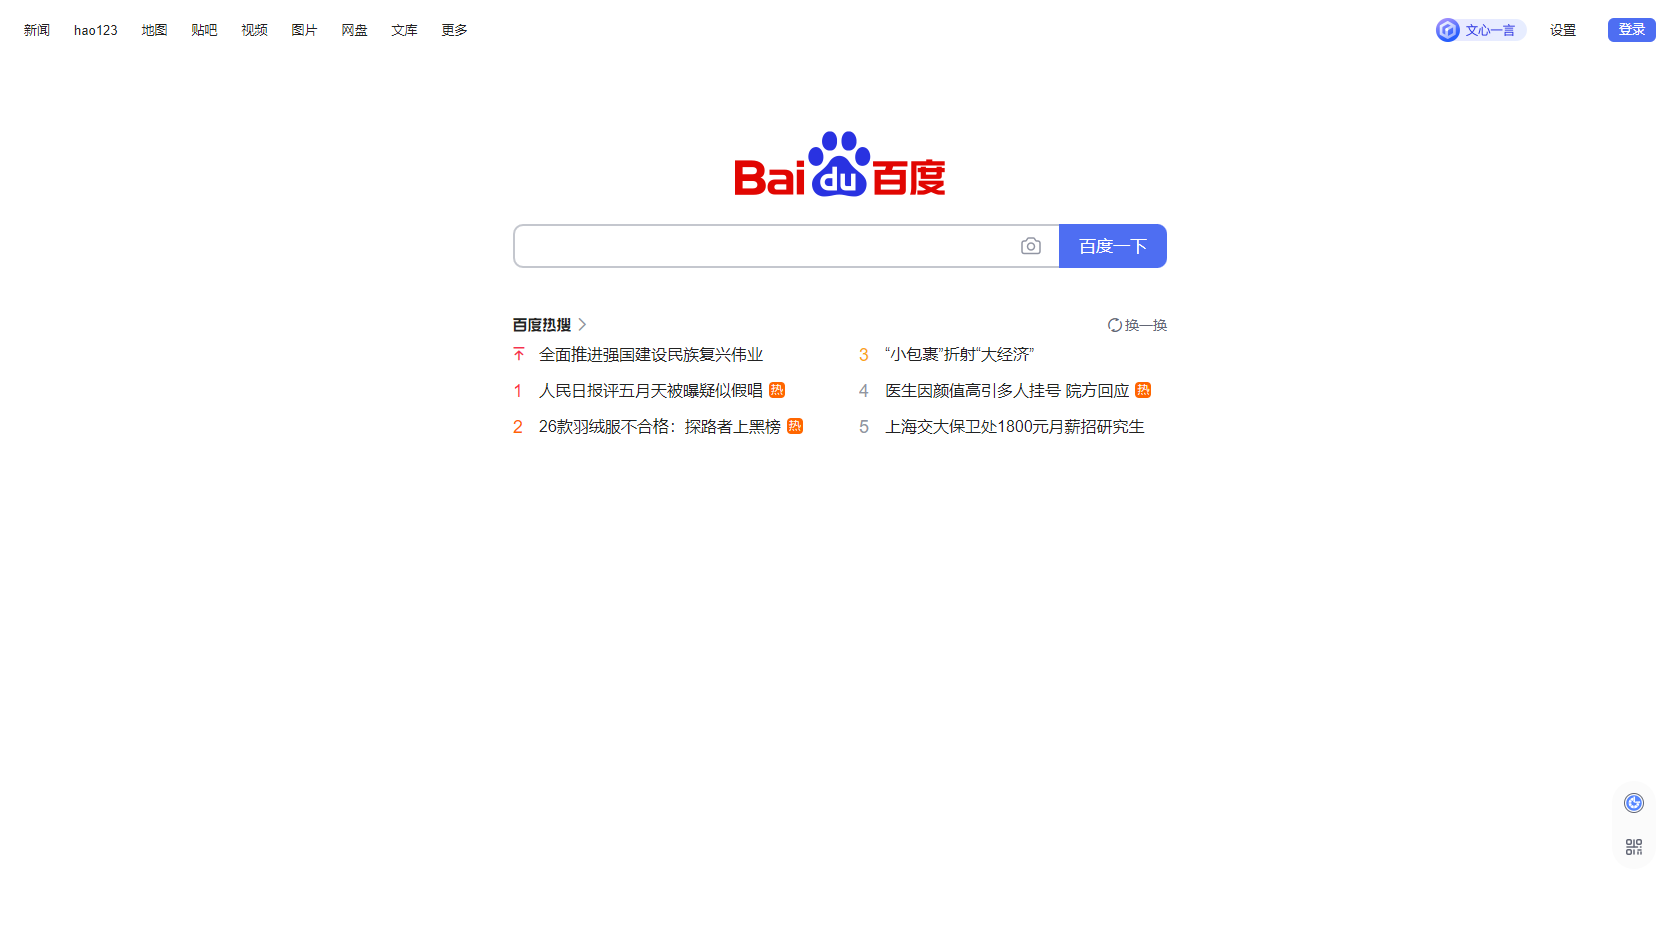 Screenshot from Baidu.com